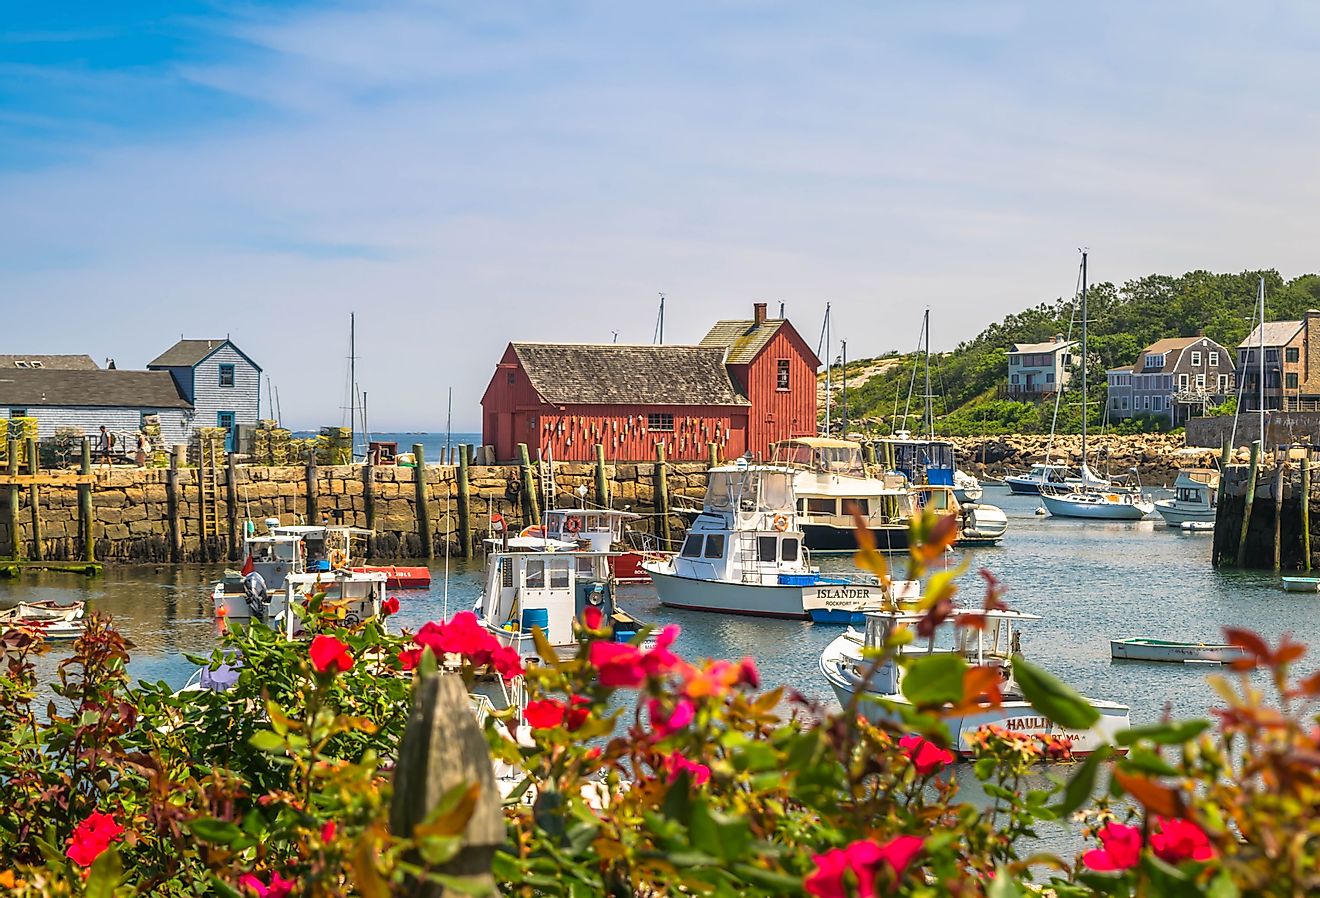 Rockport, Massachusetts. Image credit Keith J Finks via Shutterstock